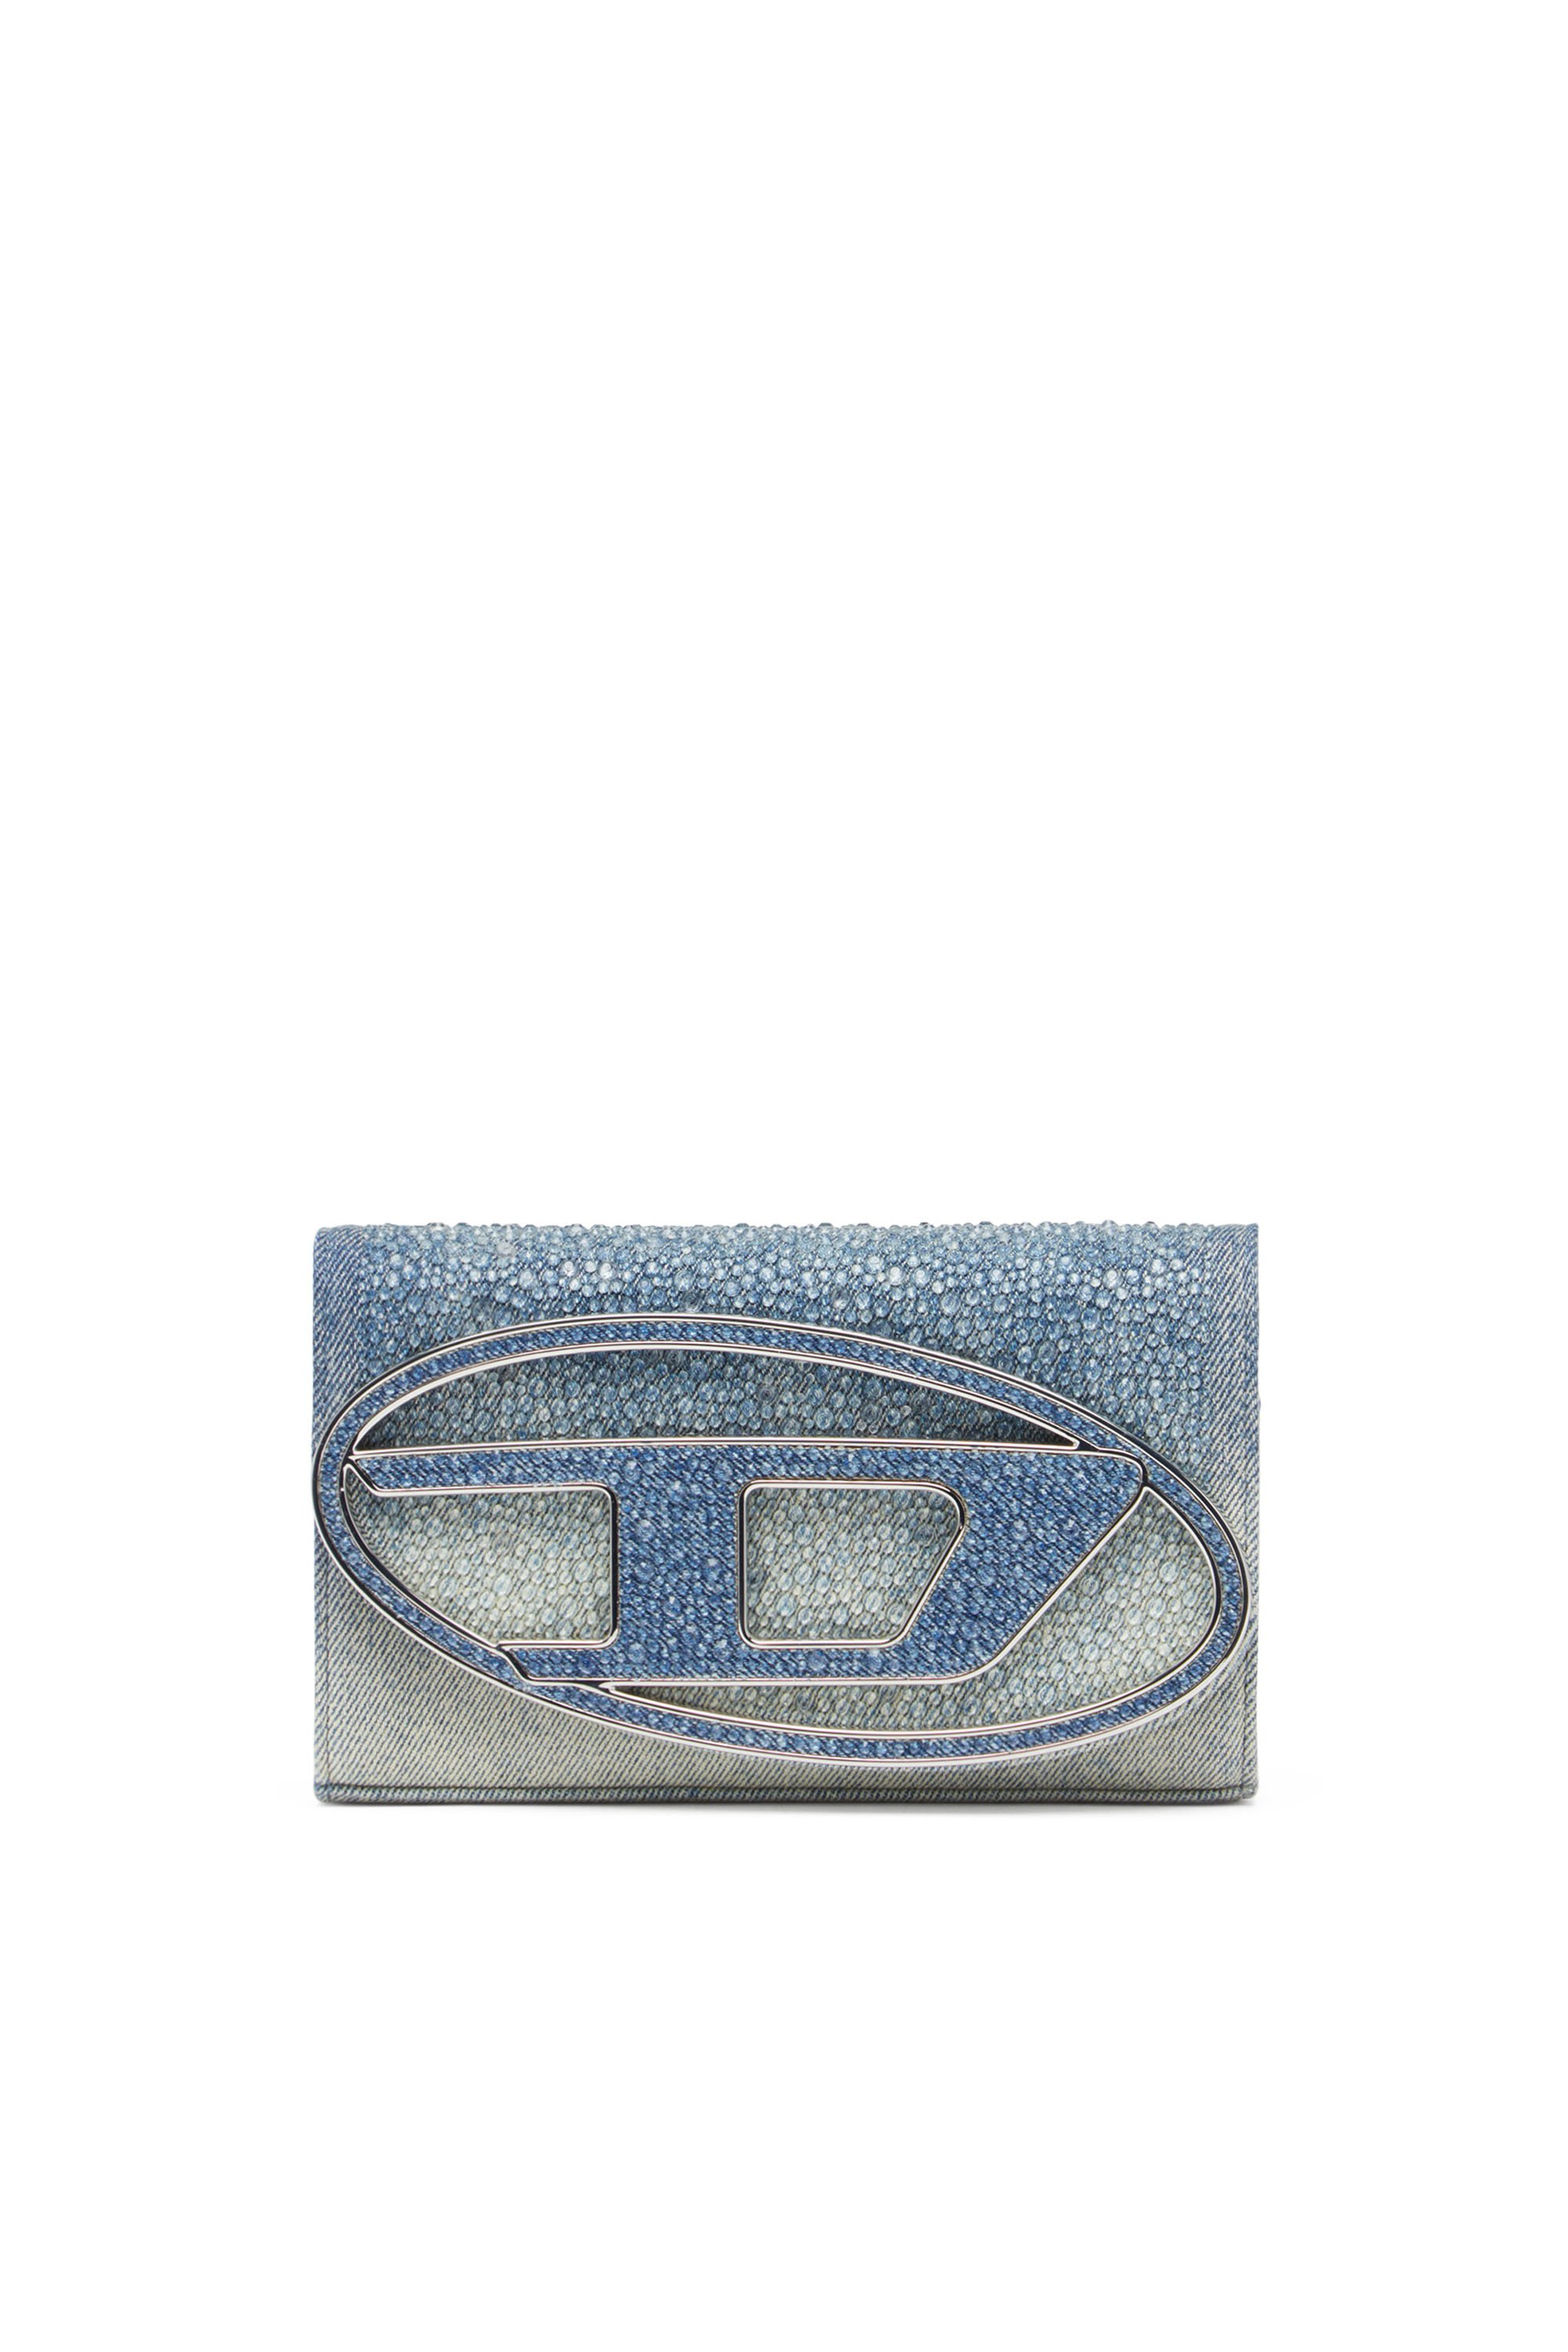 Diesel - 1DR WALLET STRAP, Female Wallet purse in crystal denim in Blue - Image 1